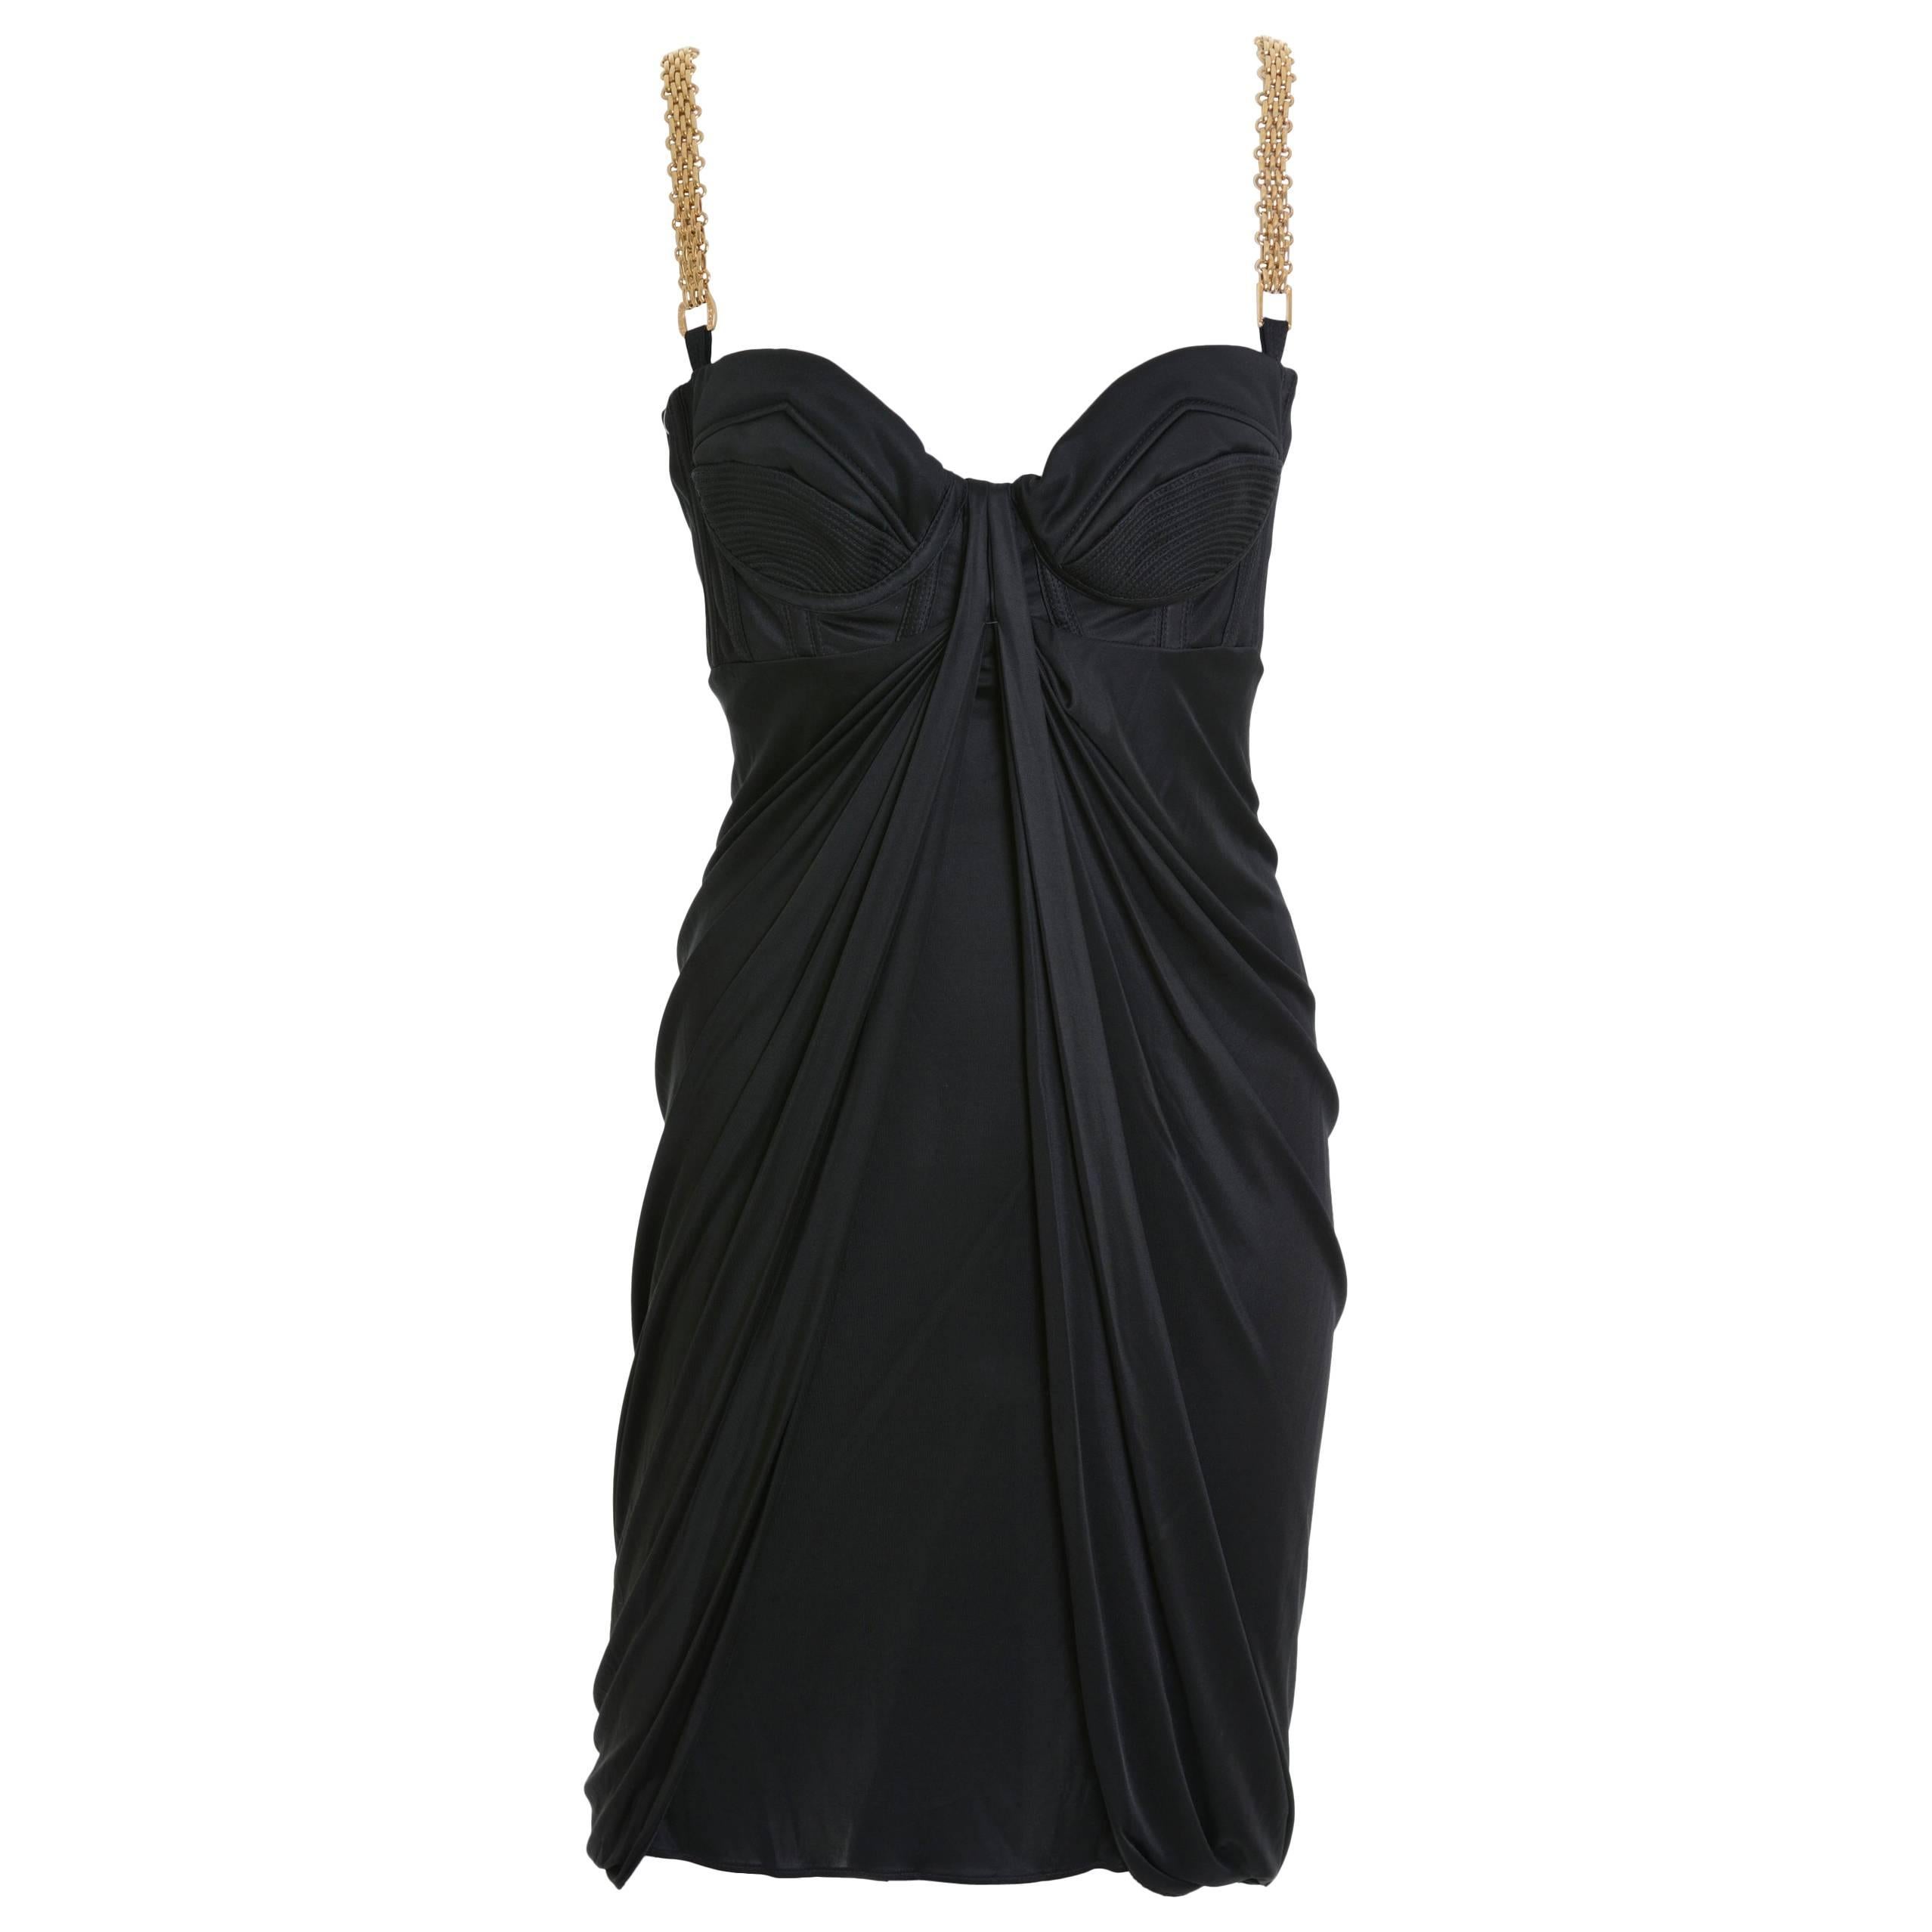 GIANNI VERSACE Black Bustier Dress For Sale